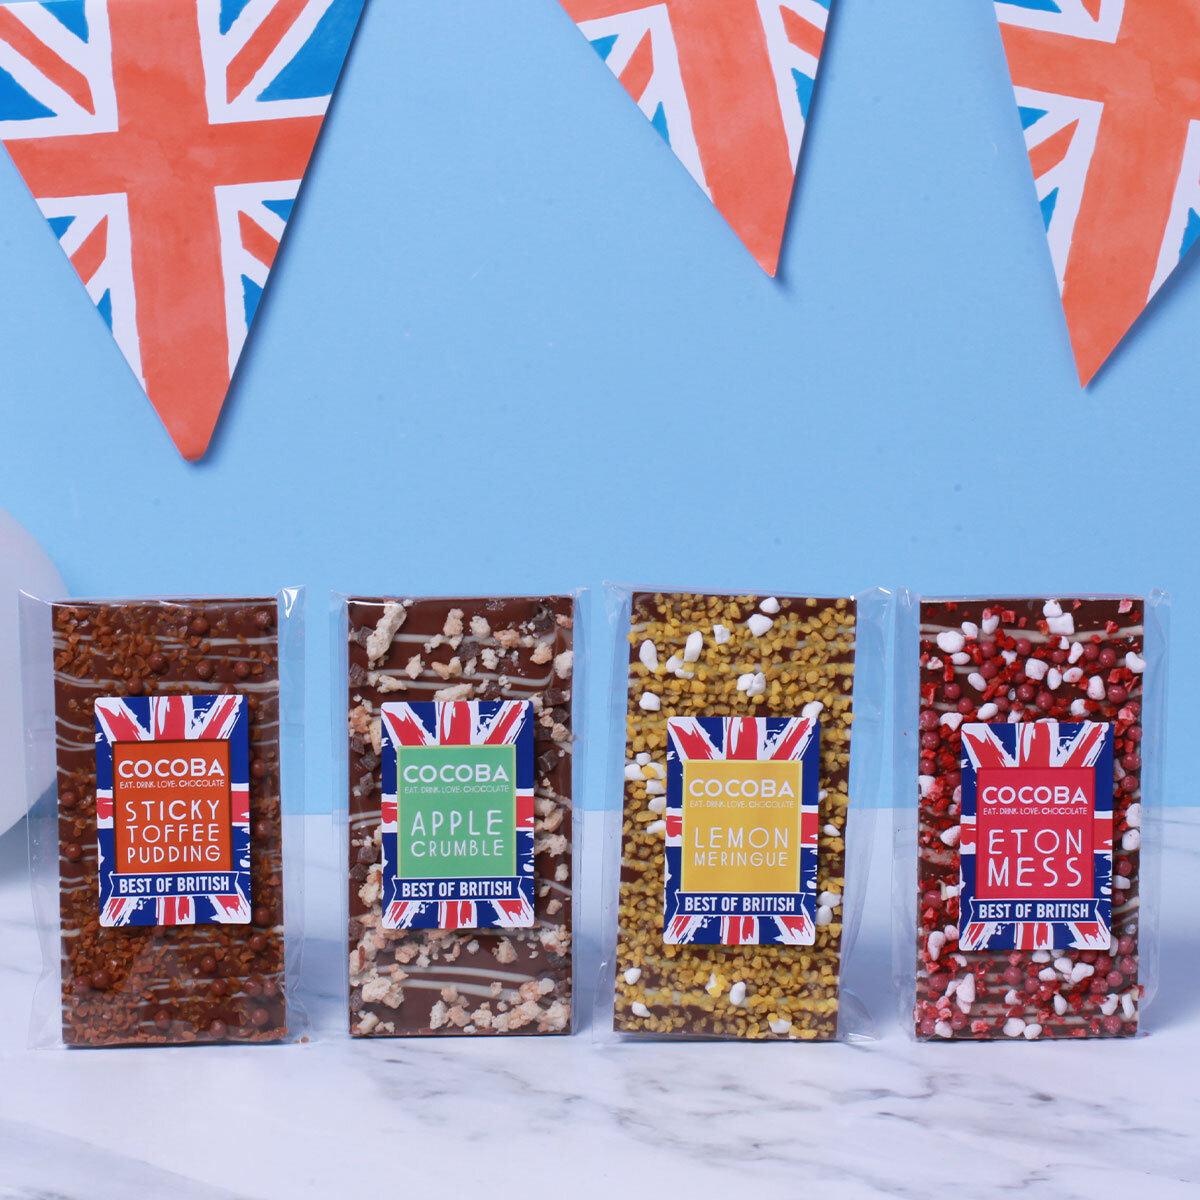 Cocoba Best Of British Chocolate Bars, 4 Pack